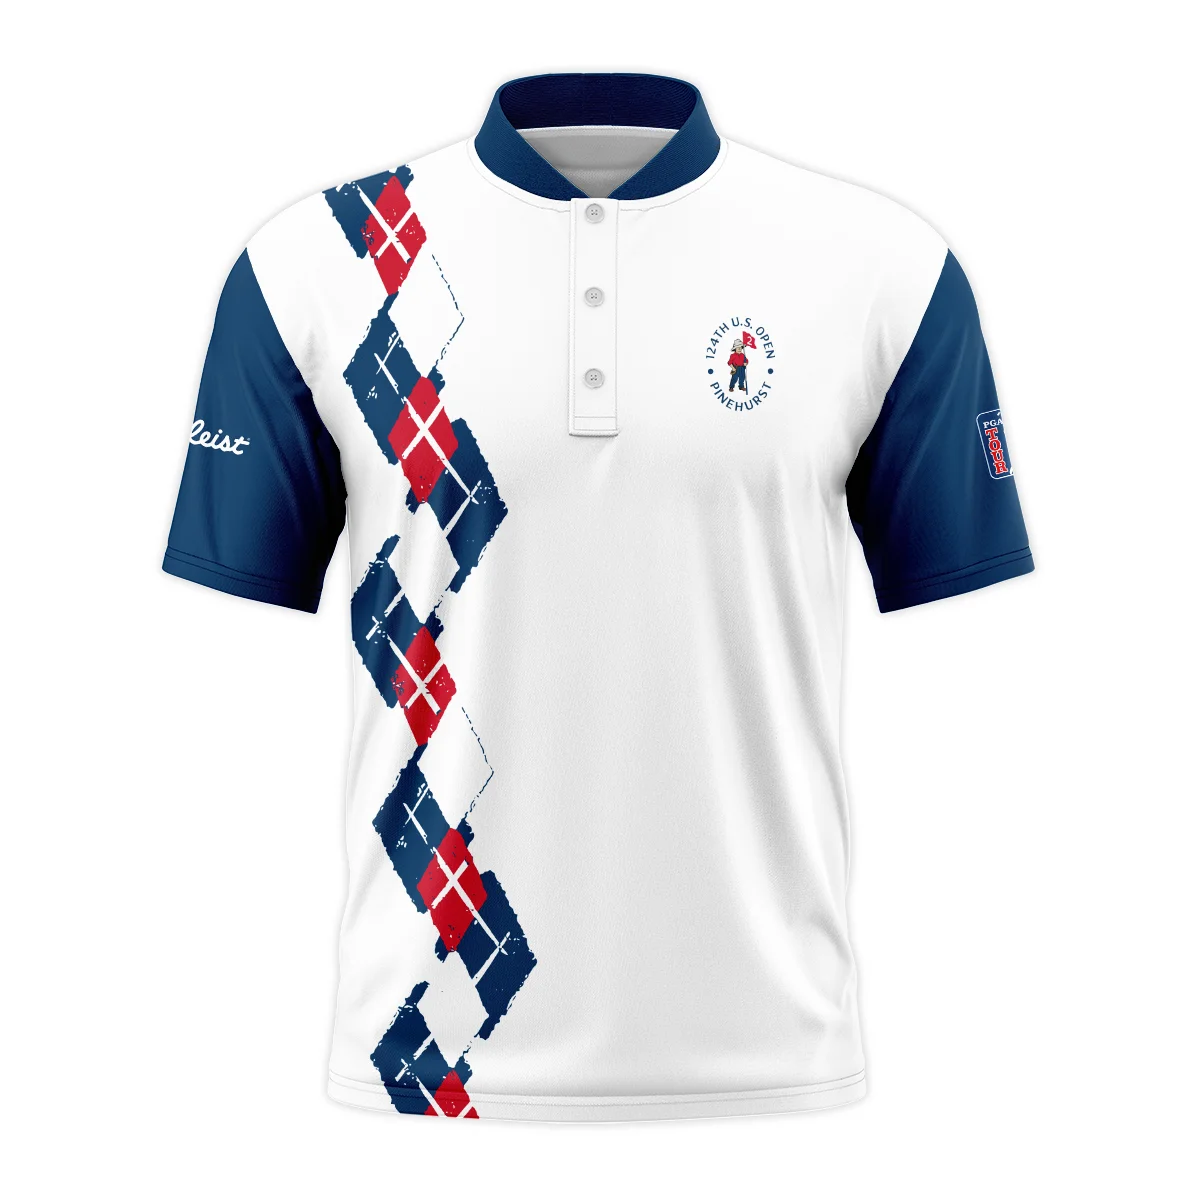 Golf Sport Pattern Blue Mix Color 124th U.S. Open Pinehurst Titlest Zipper Polo Shirt Style Classic